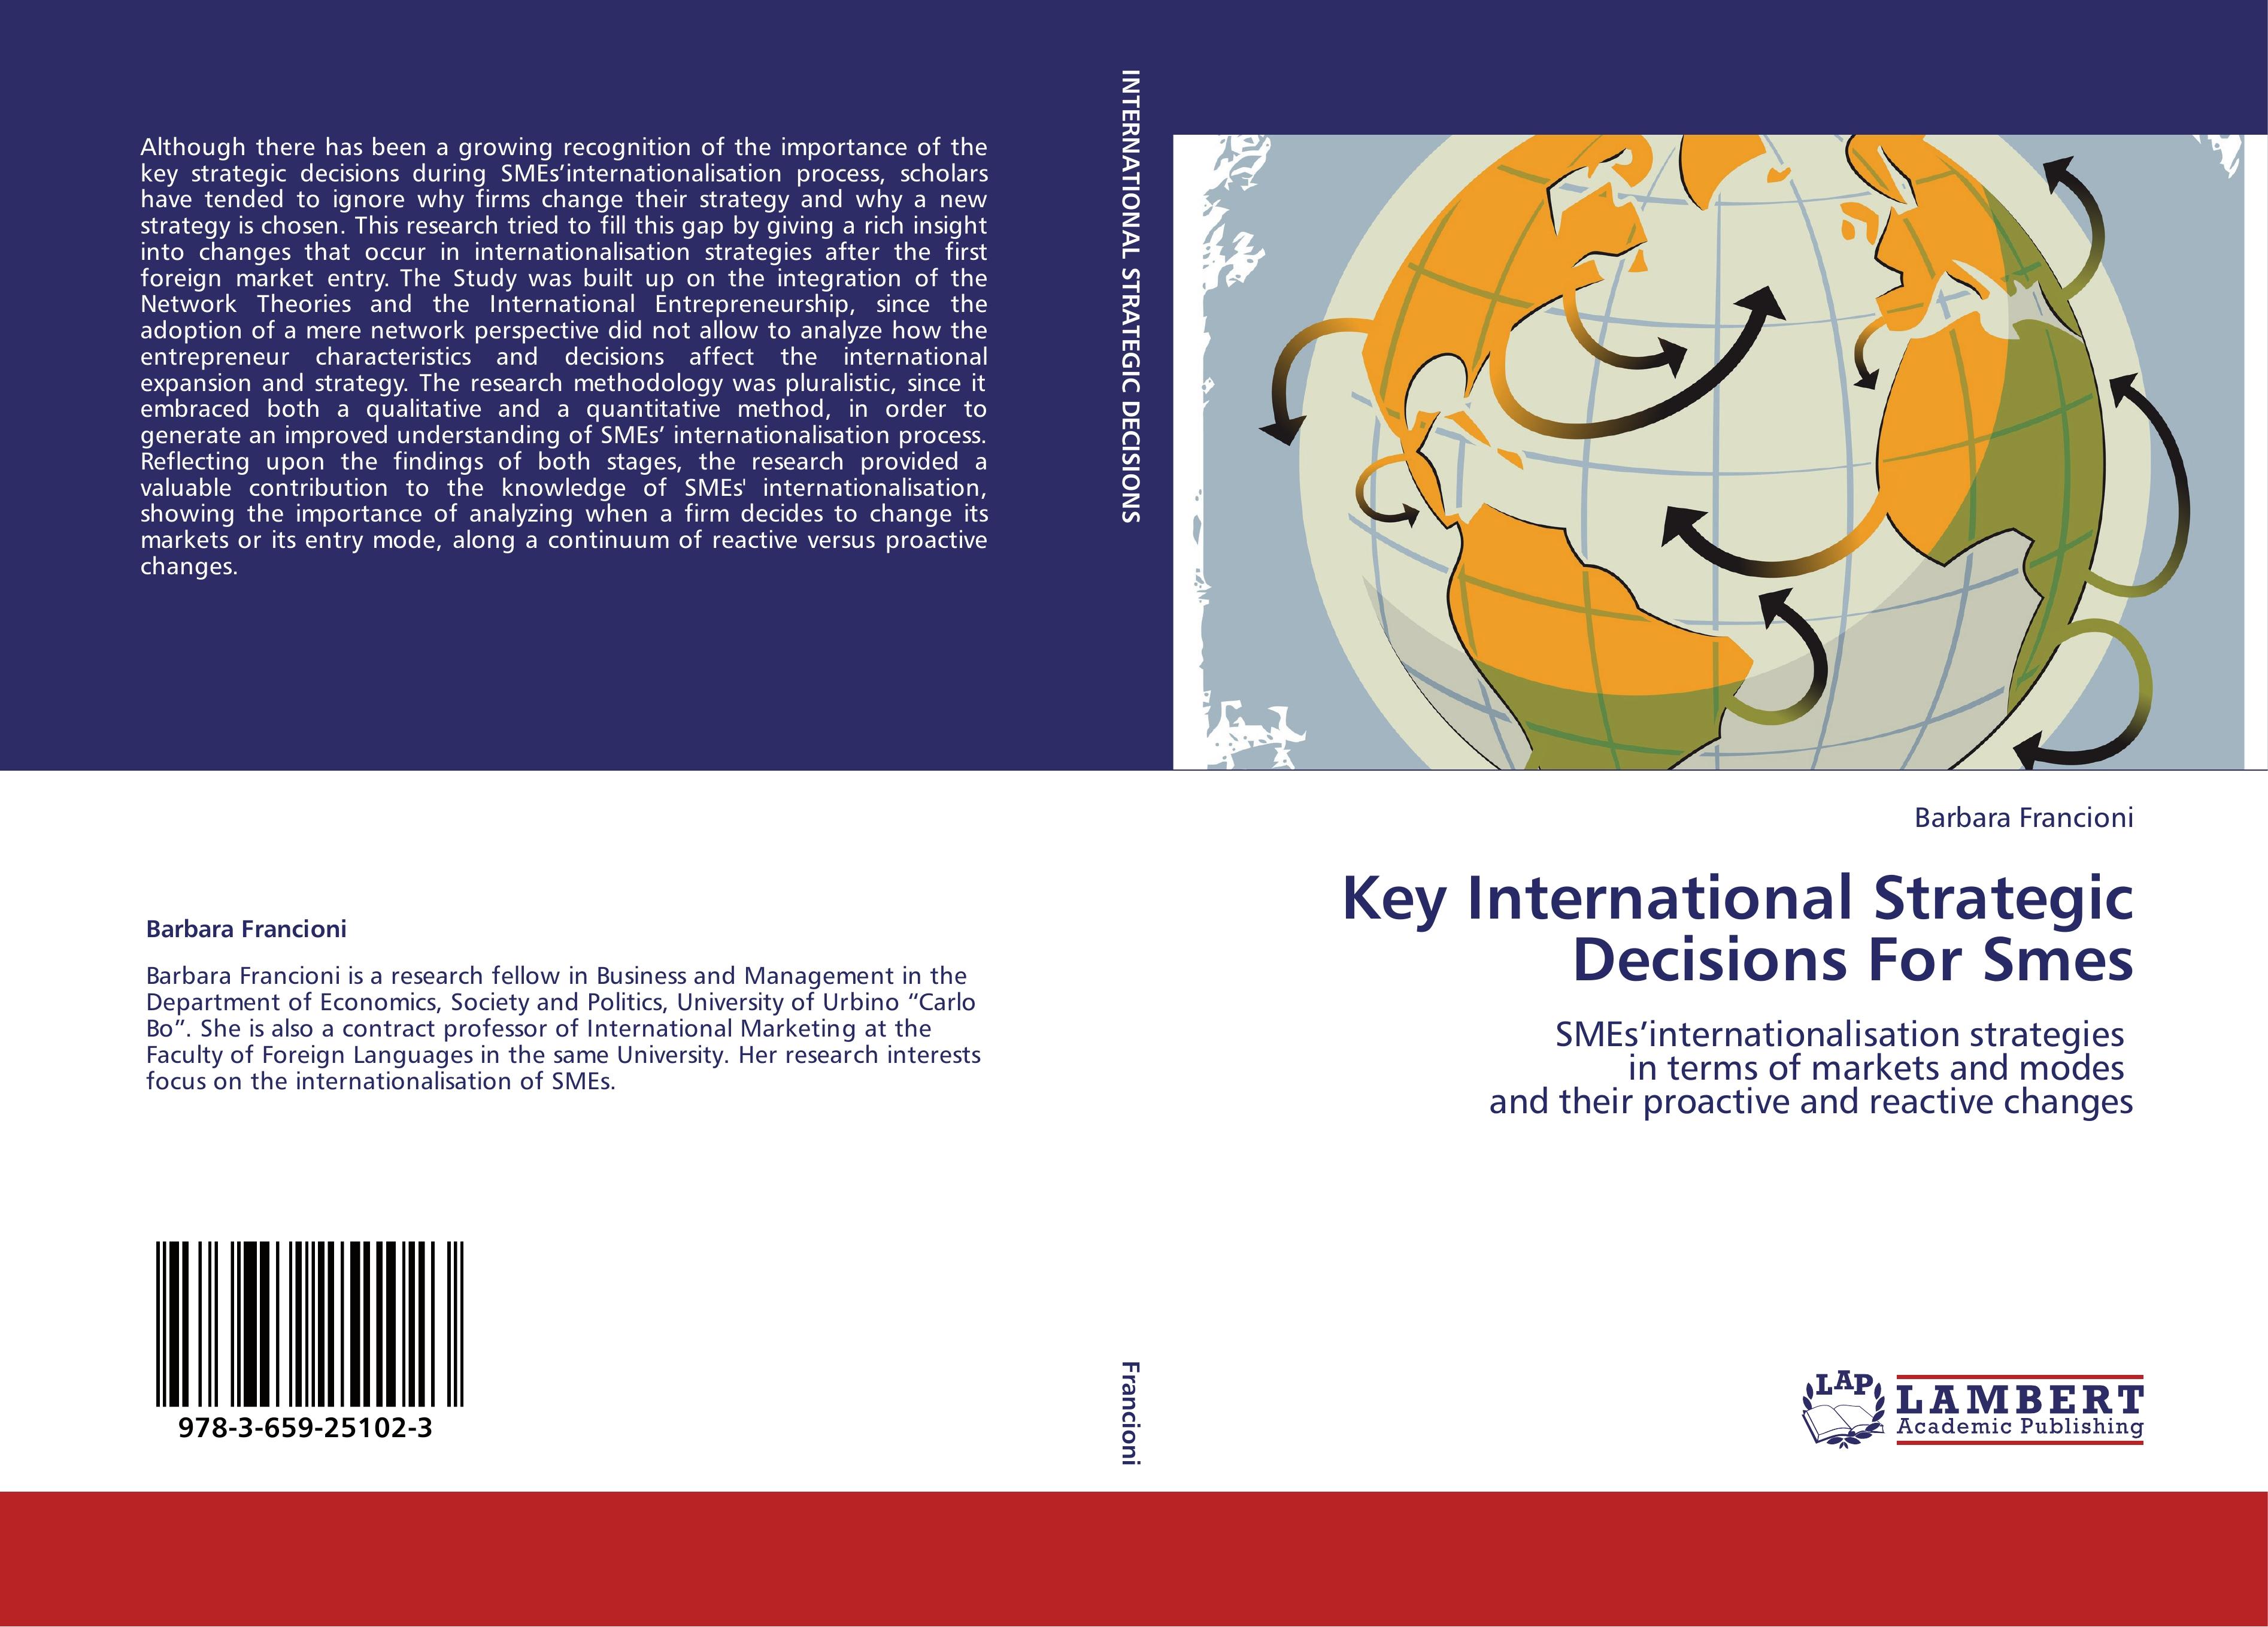 Key International Strategic Decisions For Smes - Barbara Francioni